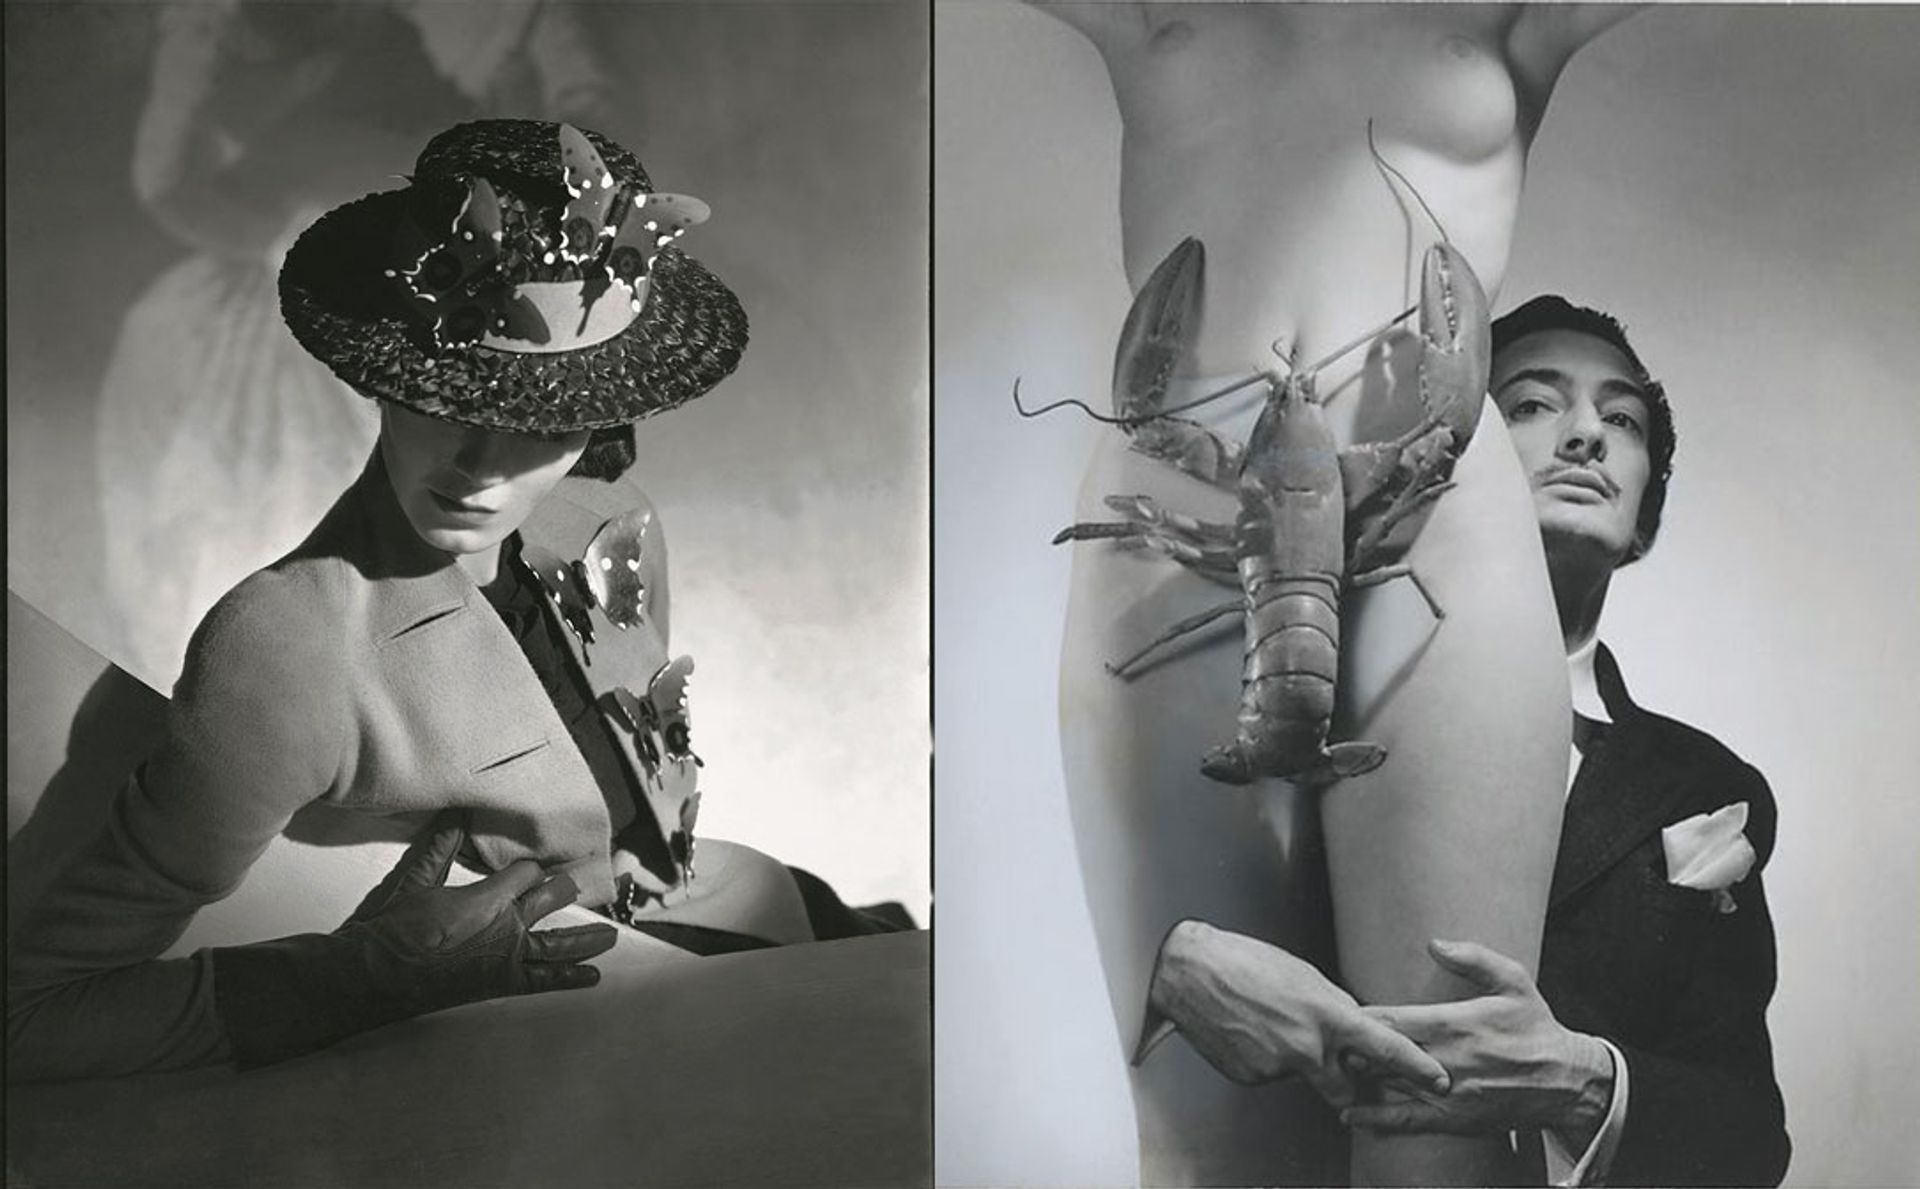 



Elsa Schiaparelli photographed by Horst P Horst for Vogue USA in 1937 and Salvador Dalí by George Platt Lynes in 1939 © Horst P. Horst, Vogue / Condé Nast; © Estate of George Platt Lynes